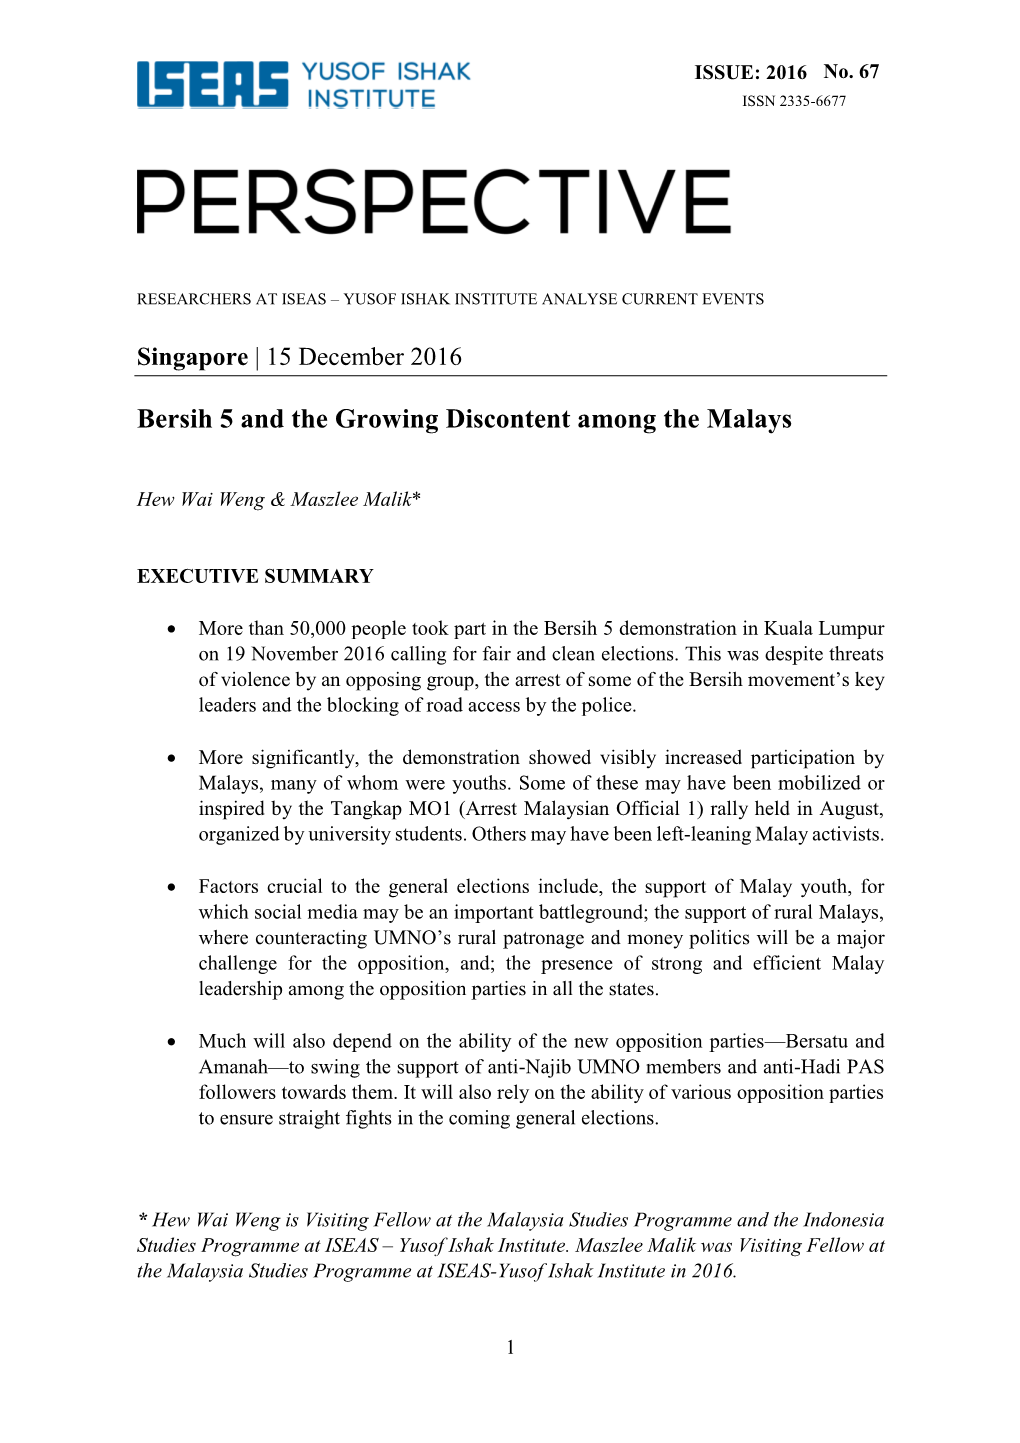 Bersih 5 and the Growing Discontent Among the Malays